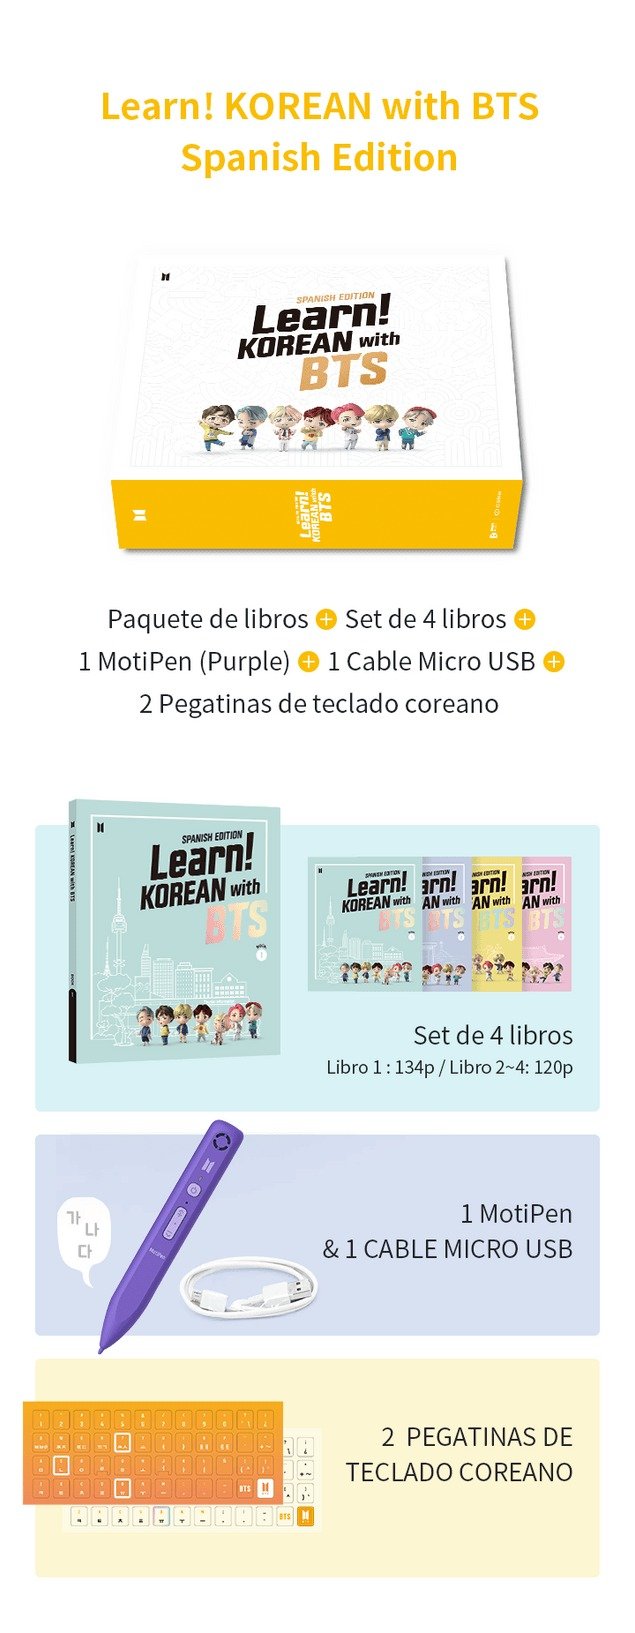 Learn! KOREAN with BTS Spanish Edition